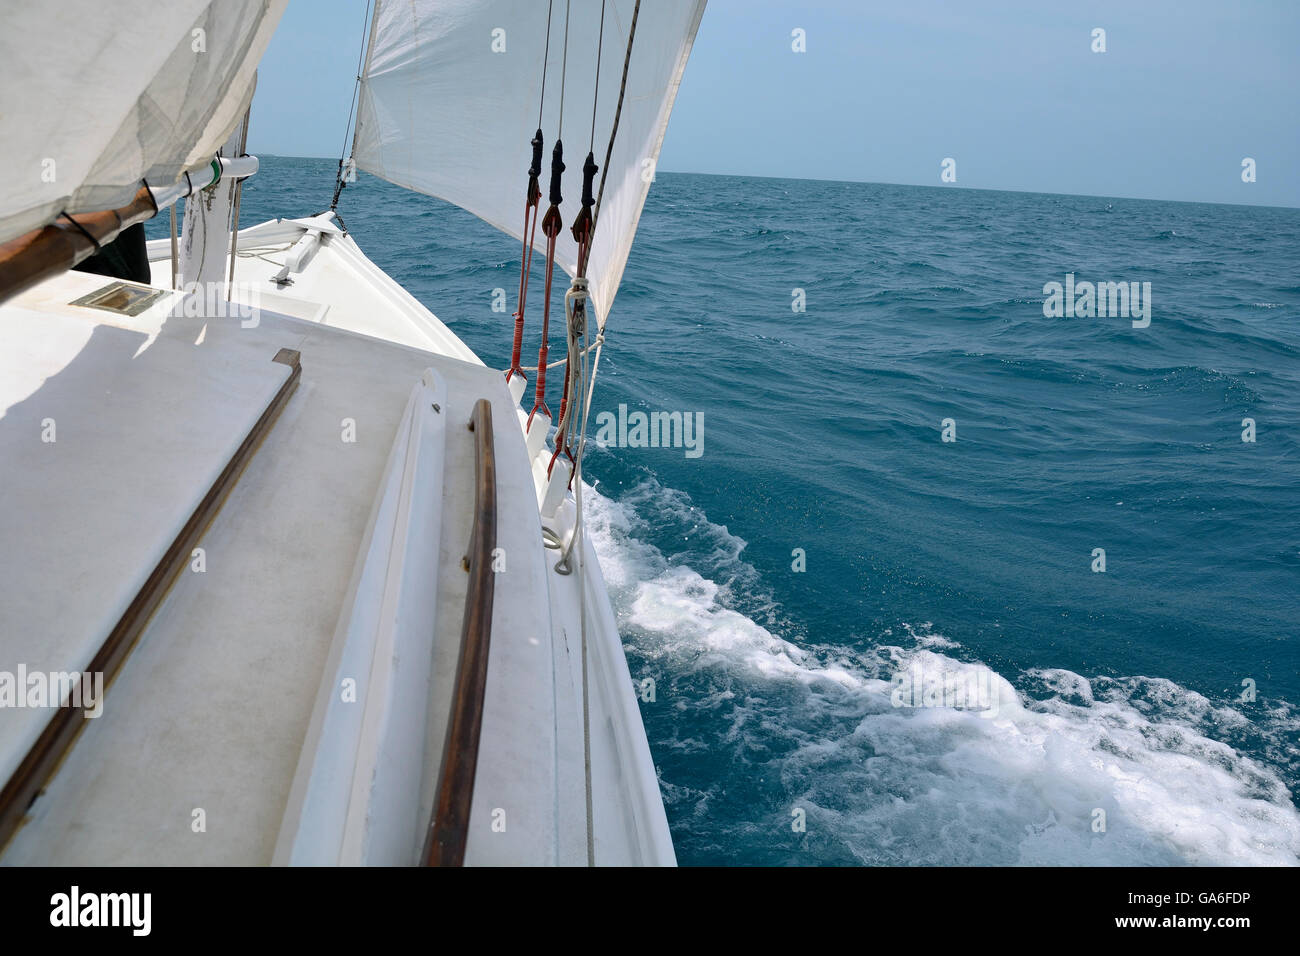 Aboard a sailboat on the sea Stock Photo